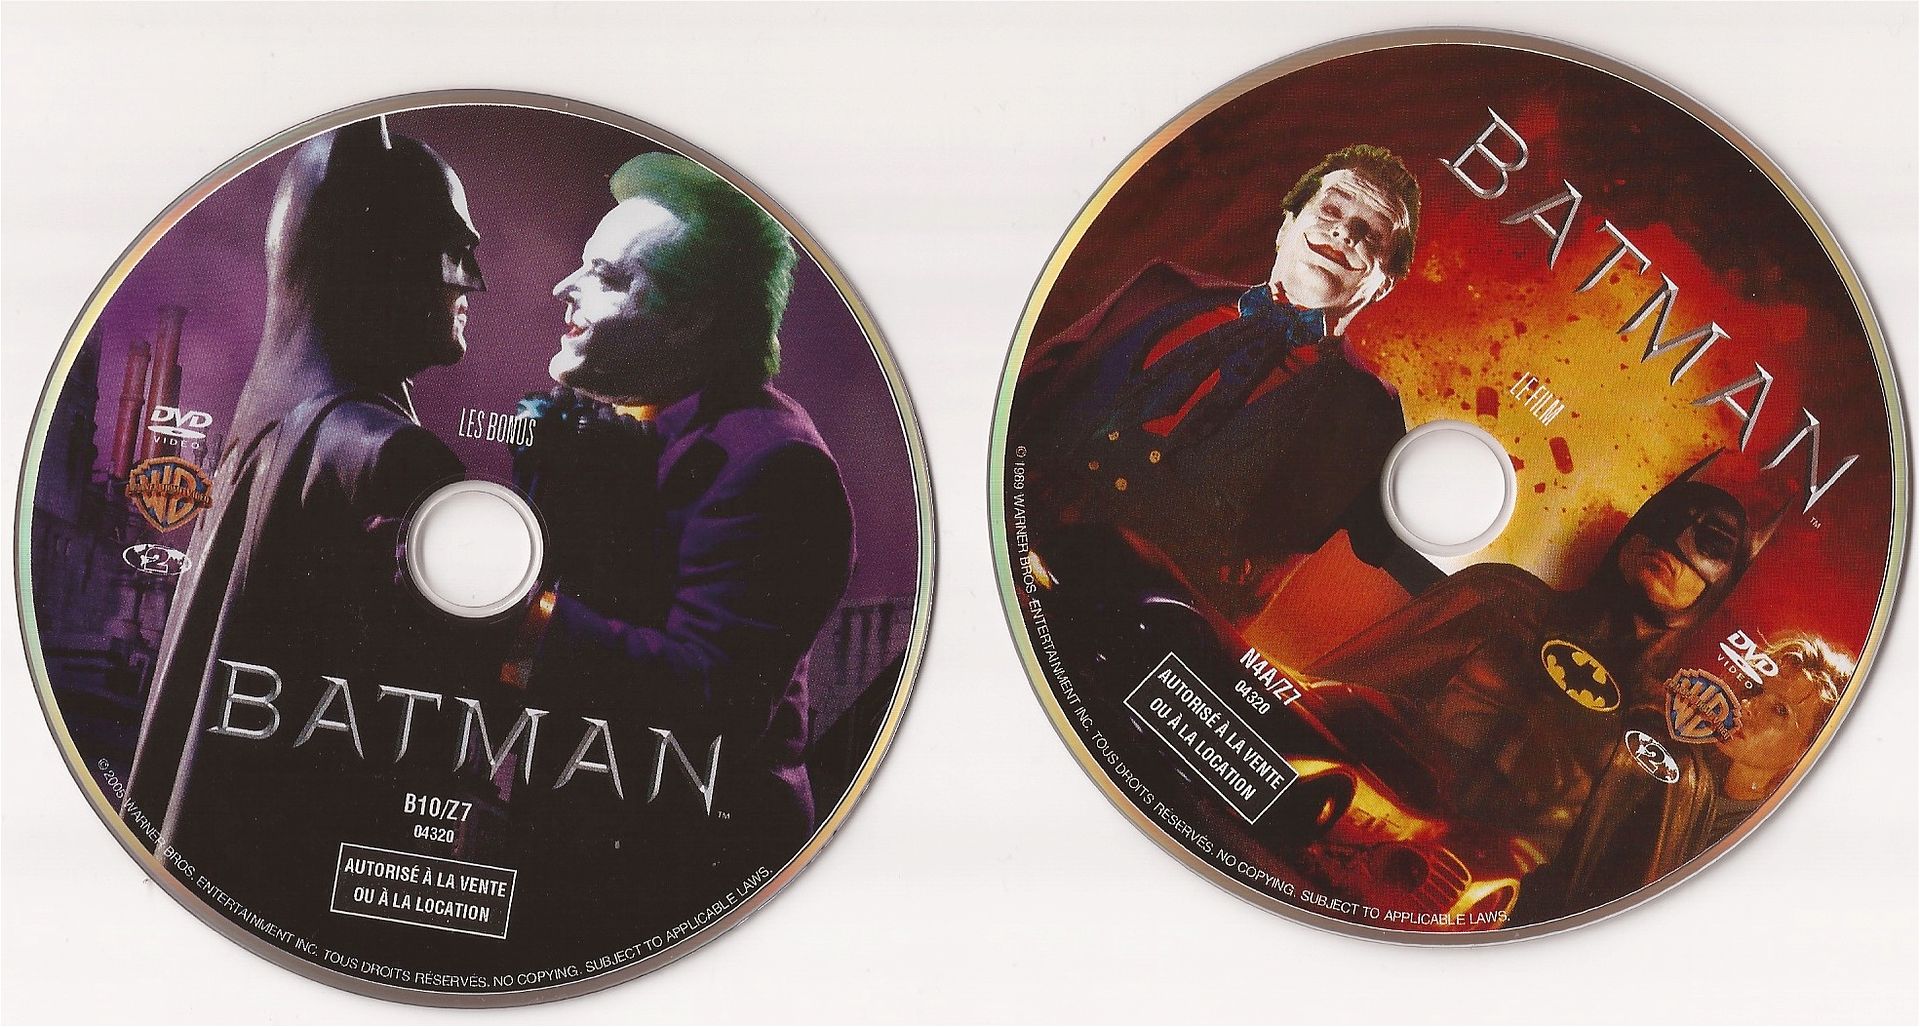 Batman - DVD/Bluray Batman6